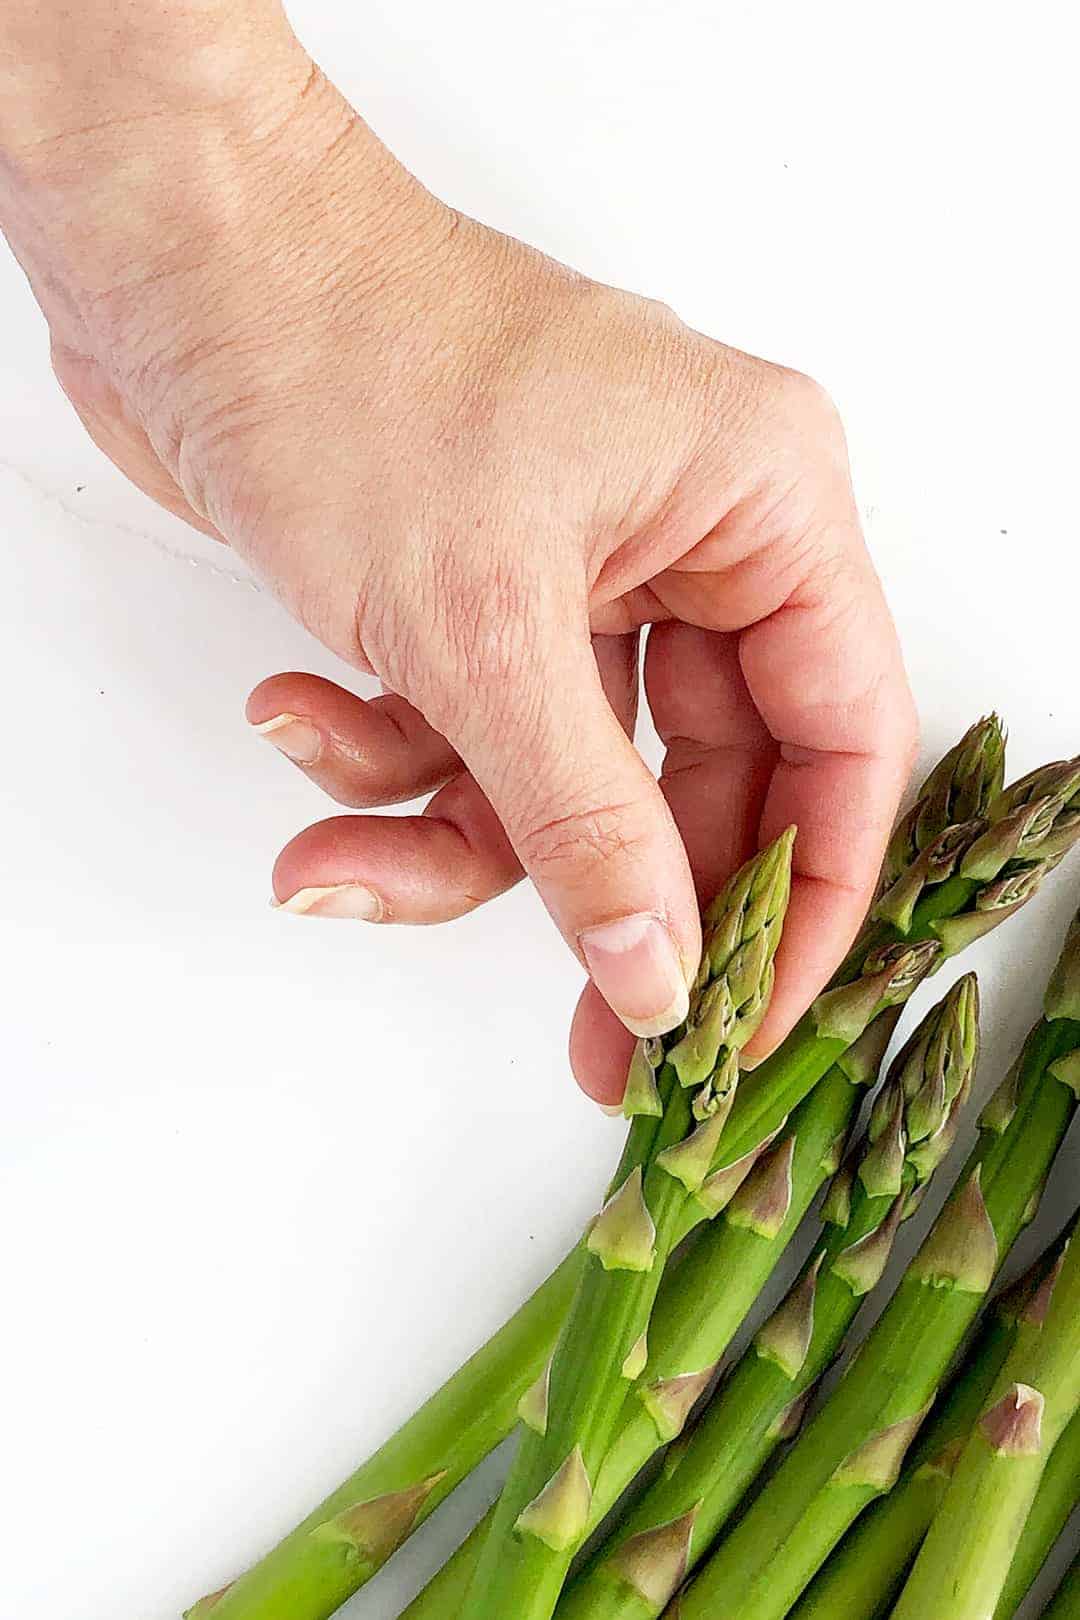 Asparagus main ingredient